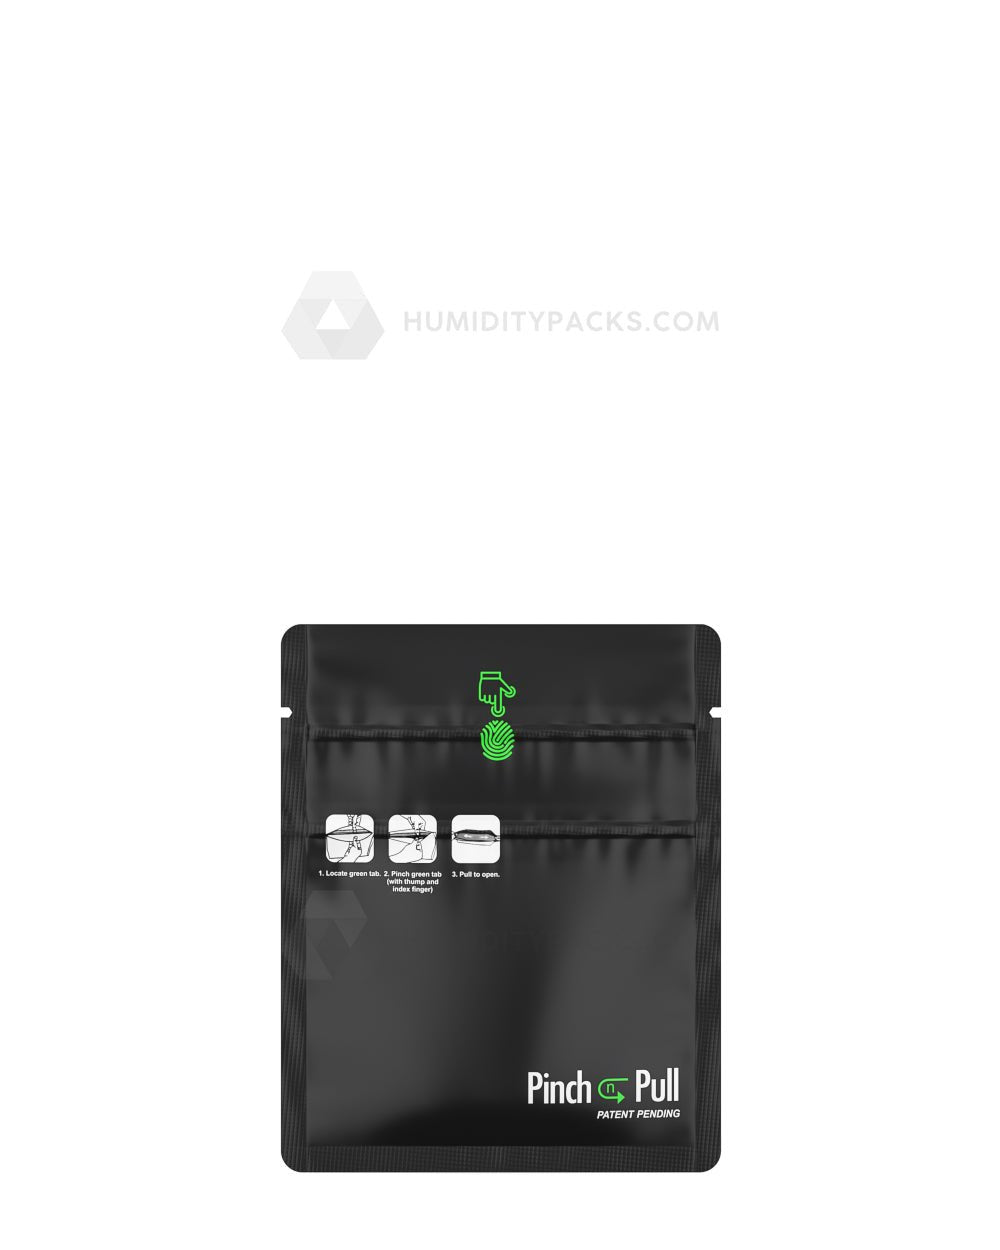 Matte-Black 3.6" x 4.5" Pinch N Pull Mylar Child Resistant & Tamper Evident Vista Bags (1 gram) 250/Box Humidity Packs - 3